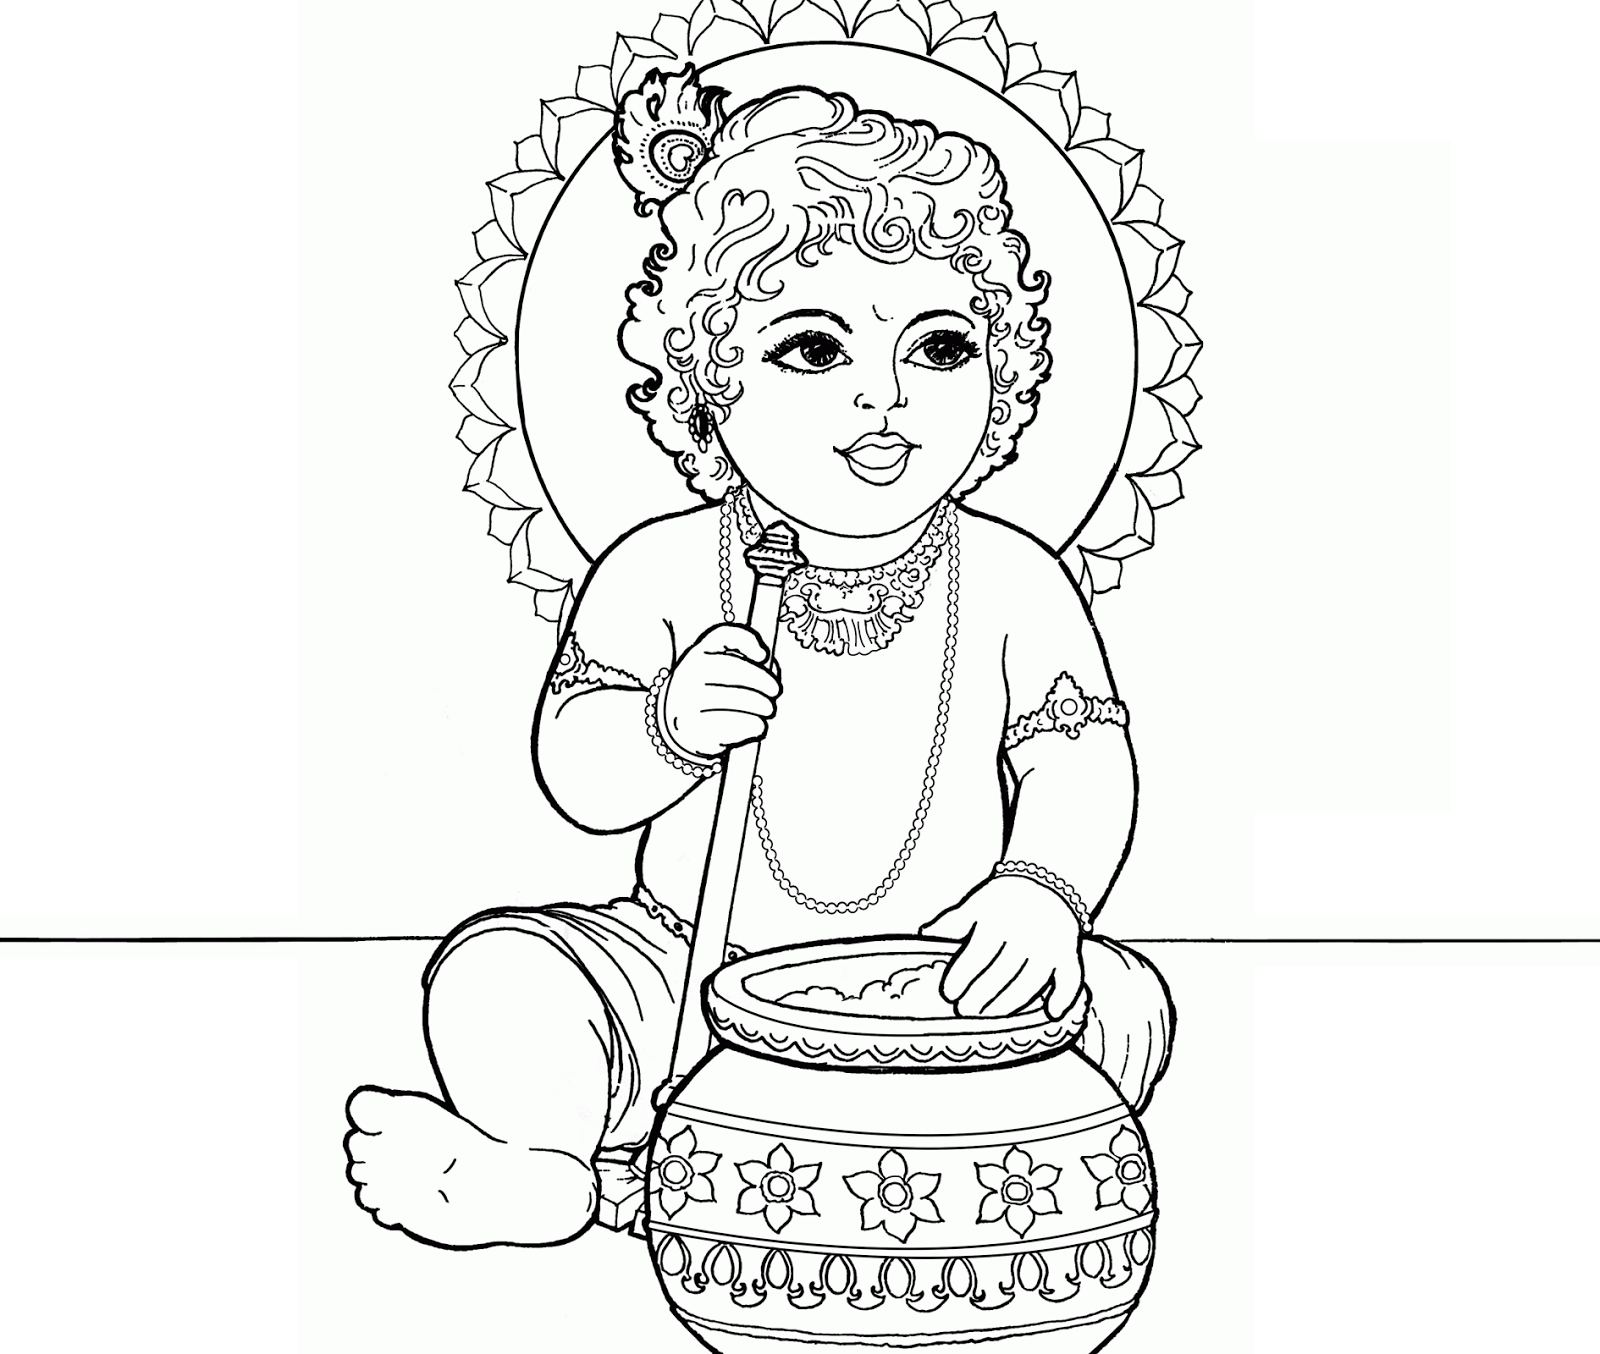 krishna coloring - Google Search | Coloring book art, Krishna art ...